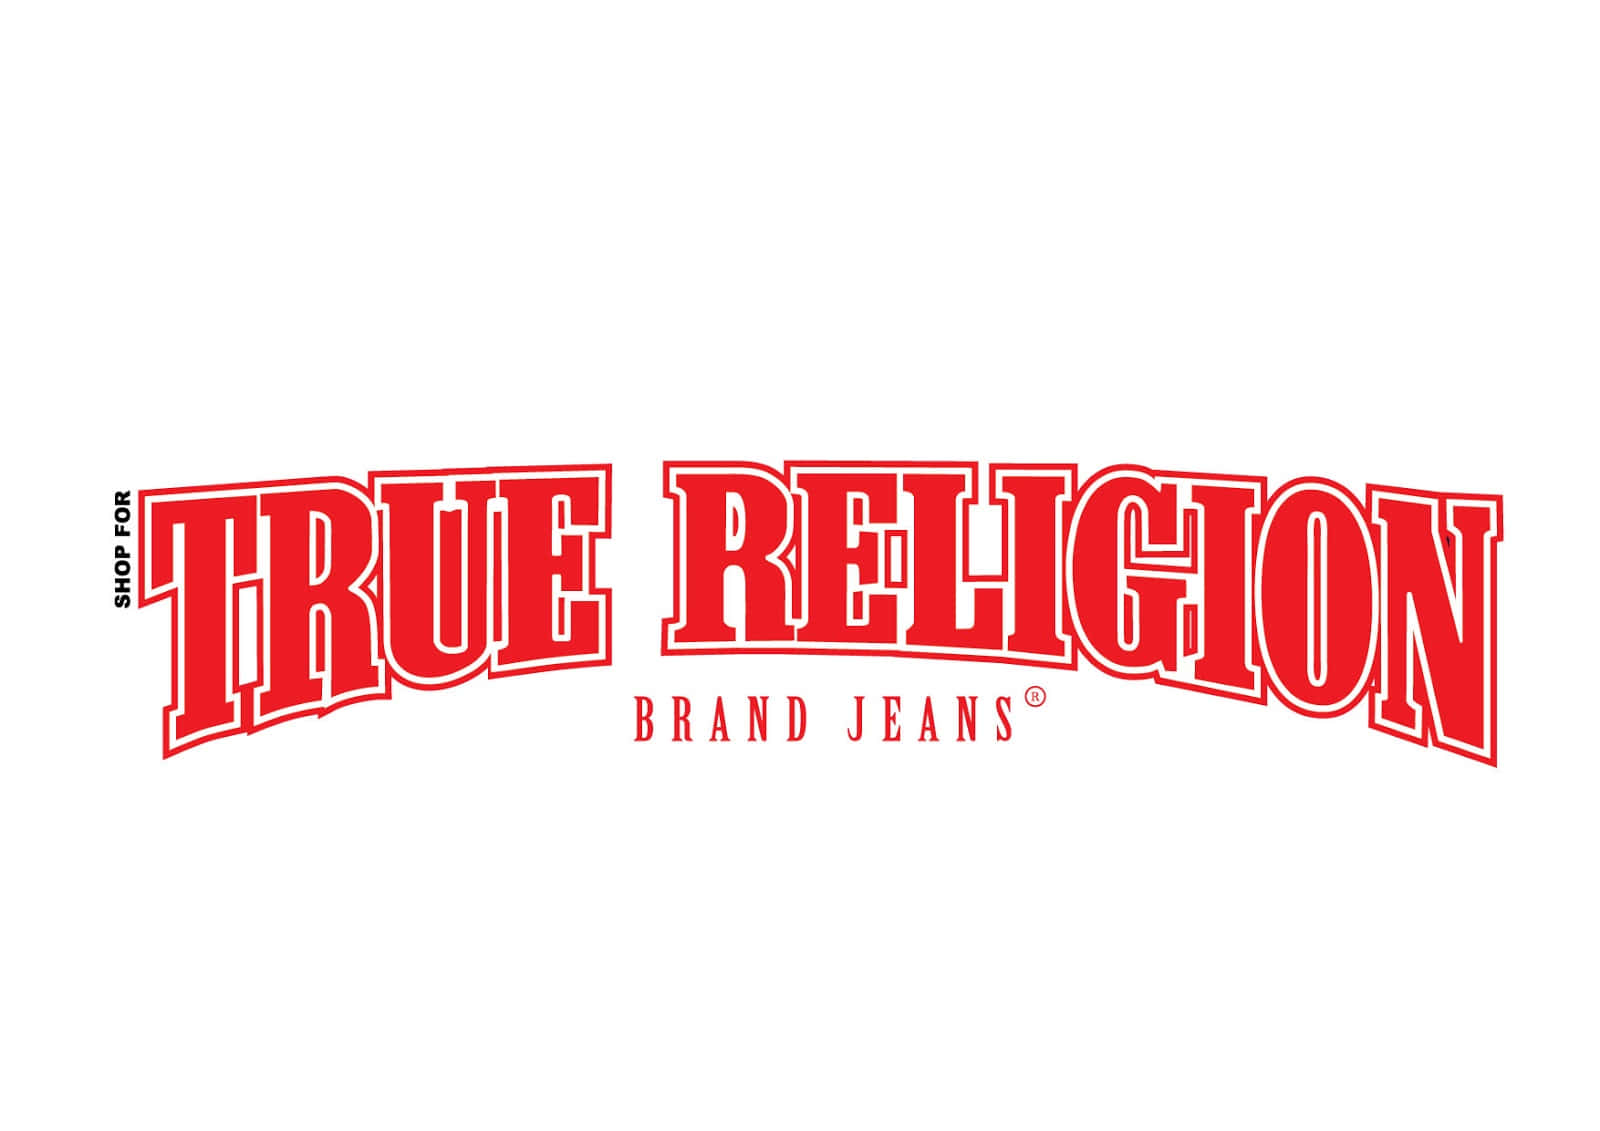 Show Your True Religion Wallpaper